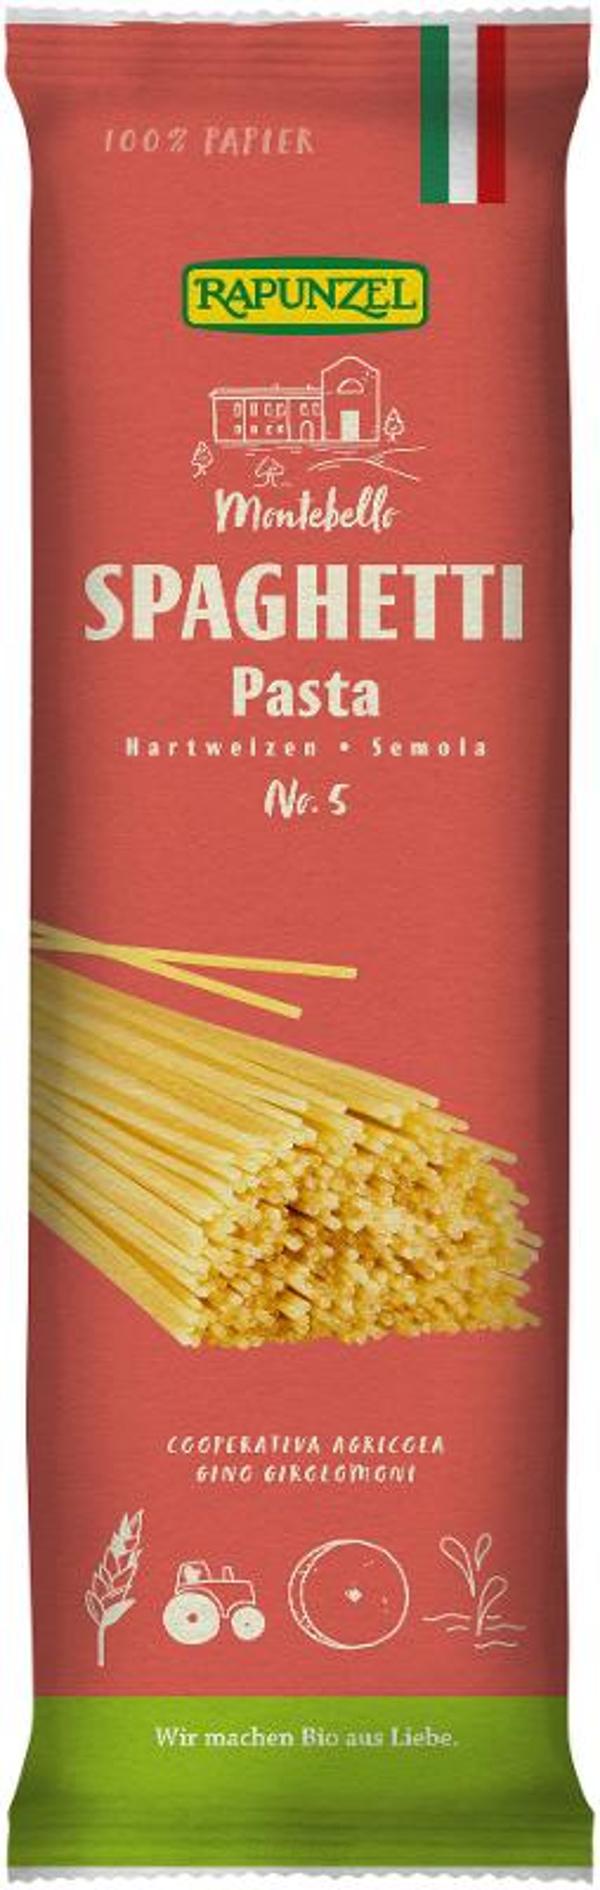 Produktfoto zu Spaghetti Rapunzel No.5